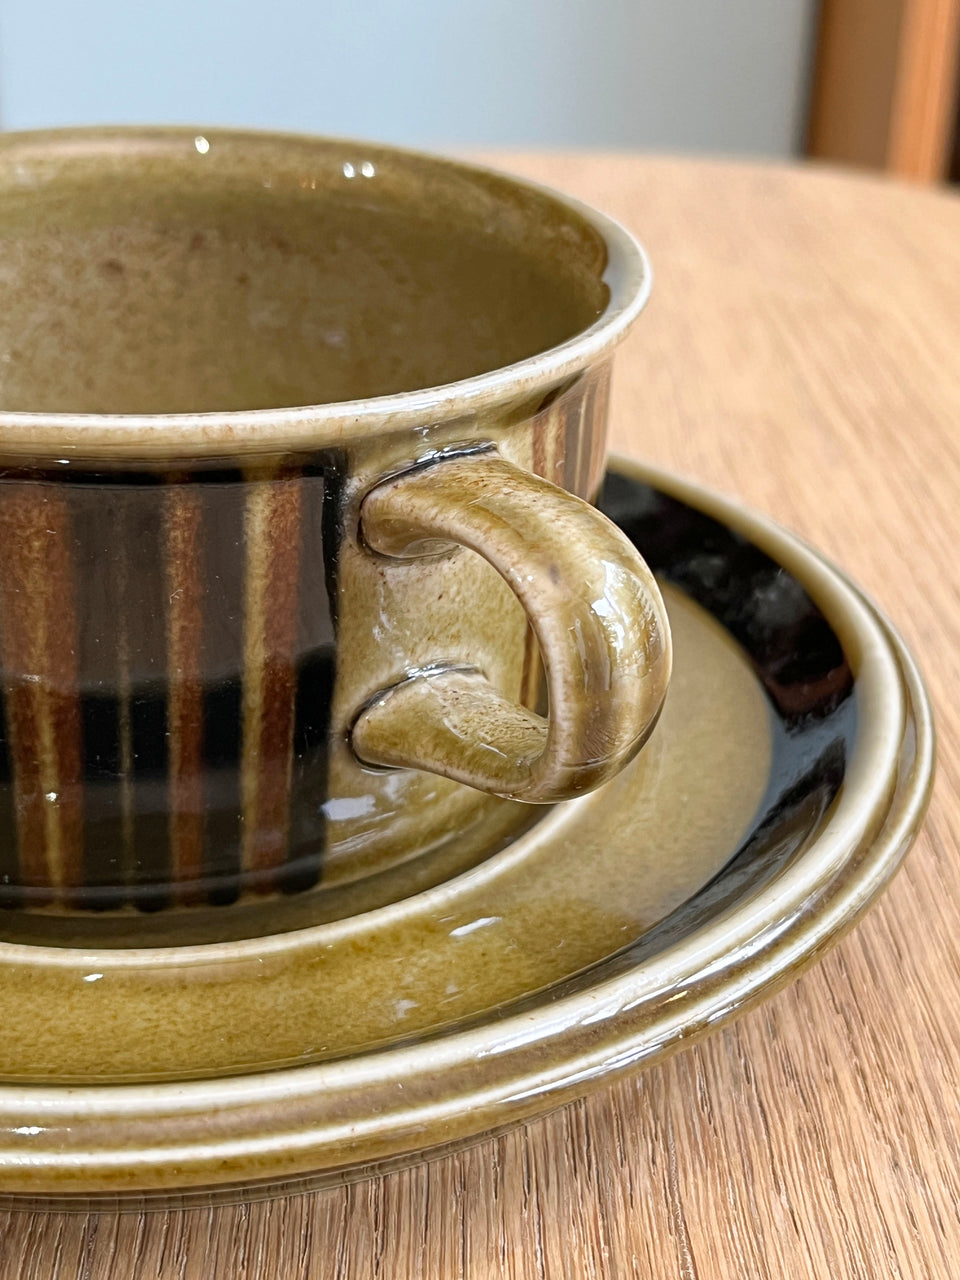 Vintage ARABIA Kosmos Teacup and Saucer/アラビア コスモス ティーカップ&ソーサー フィンランドヴィンテージ 北欧食器